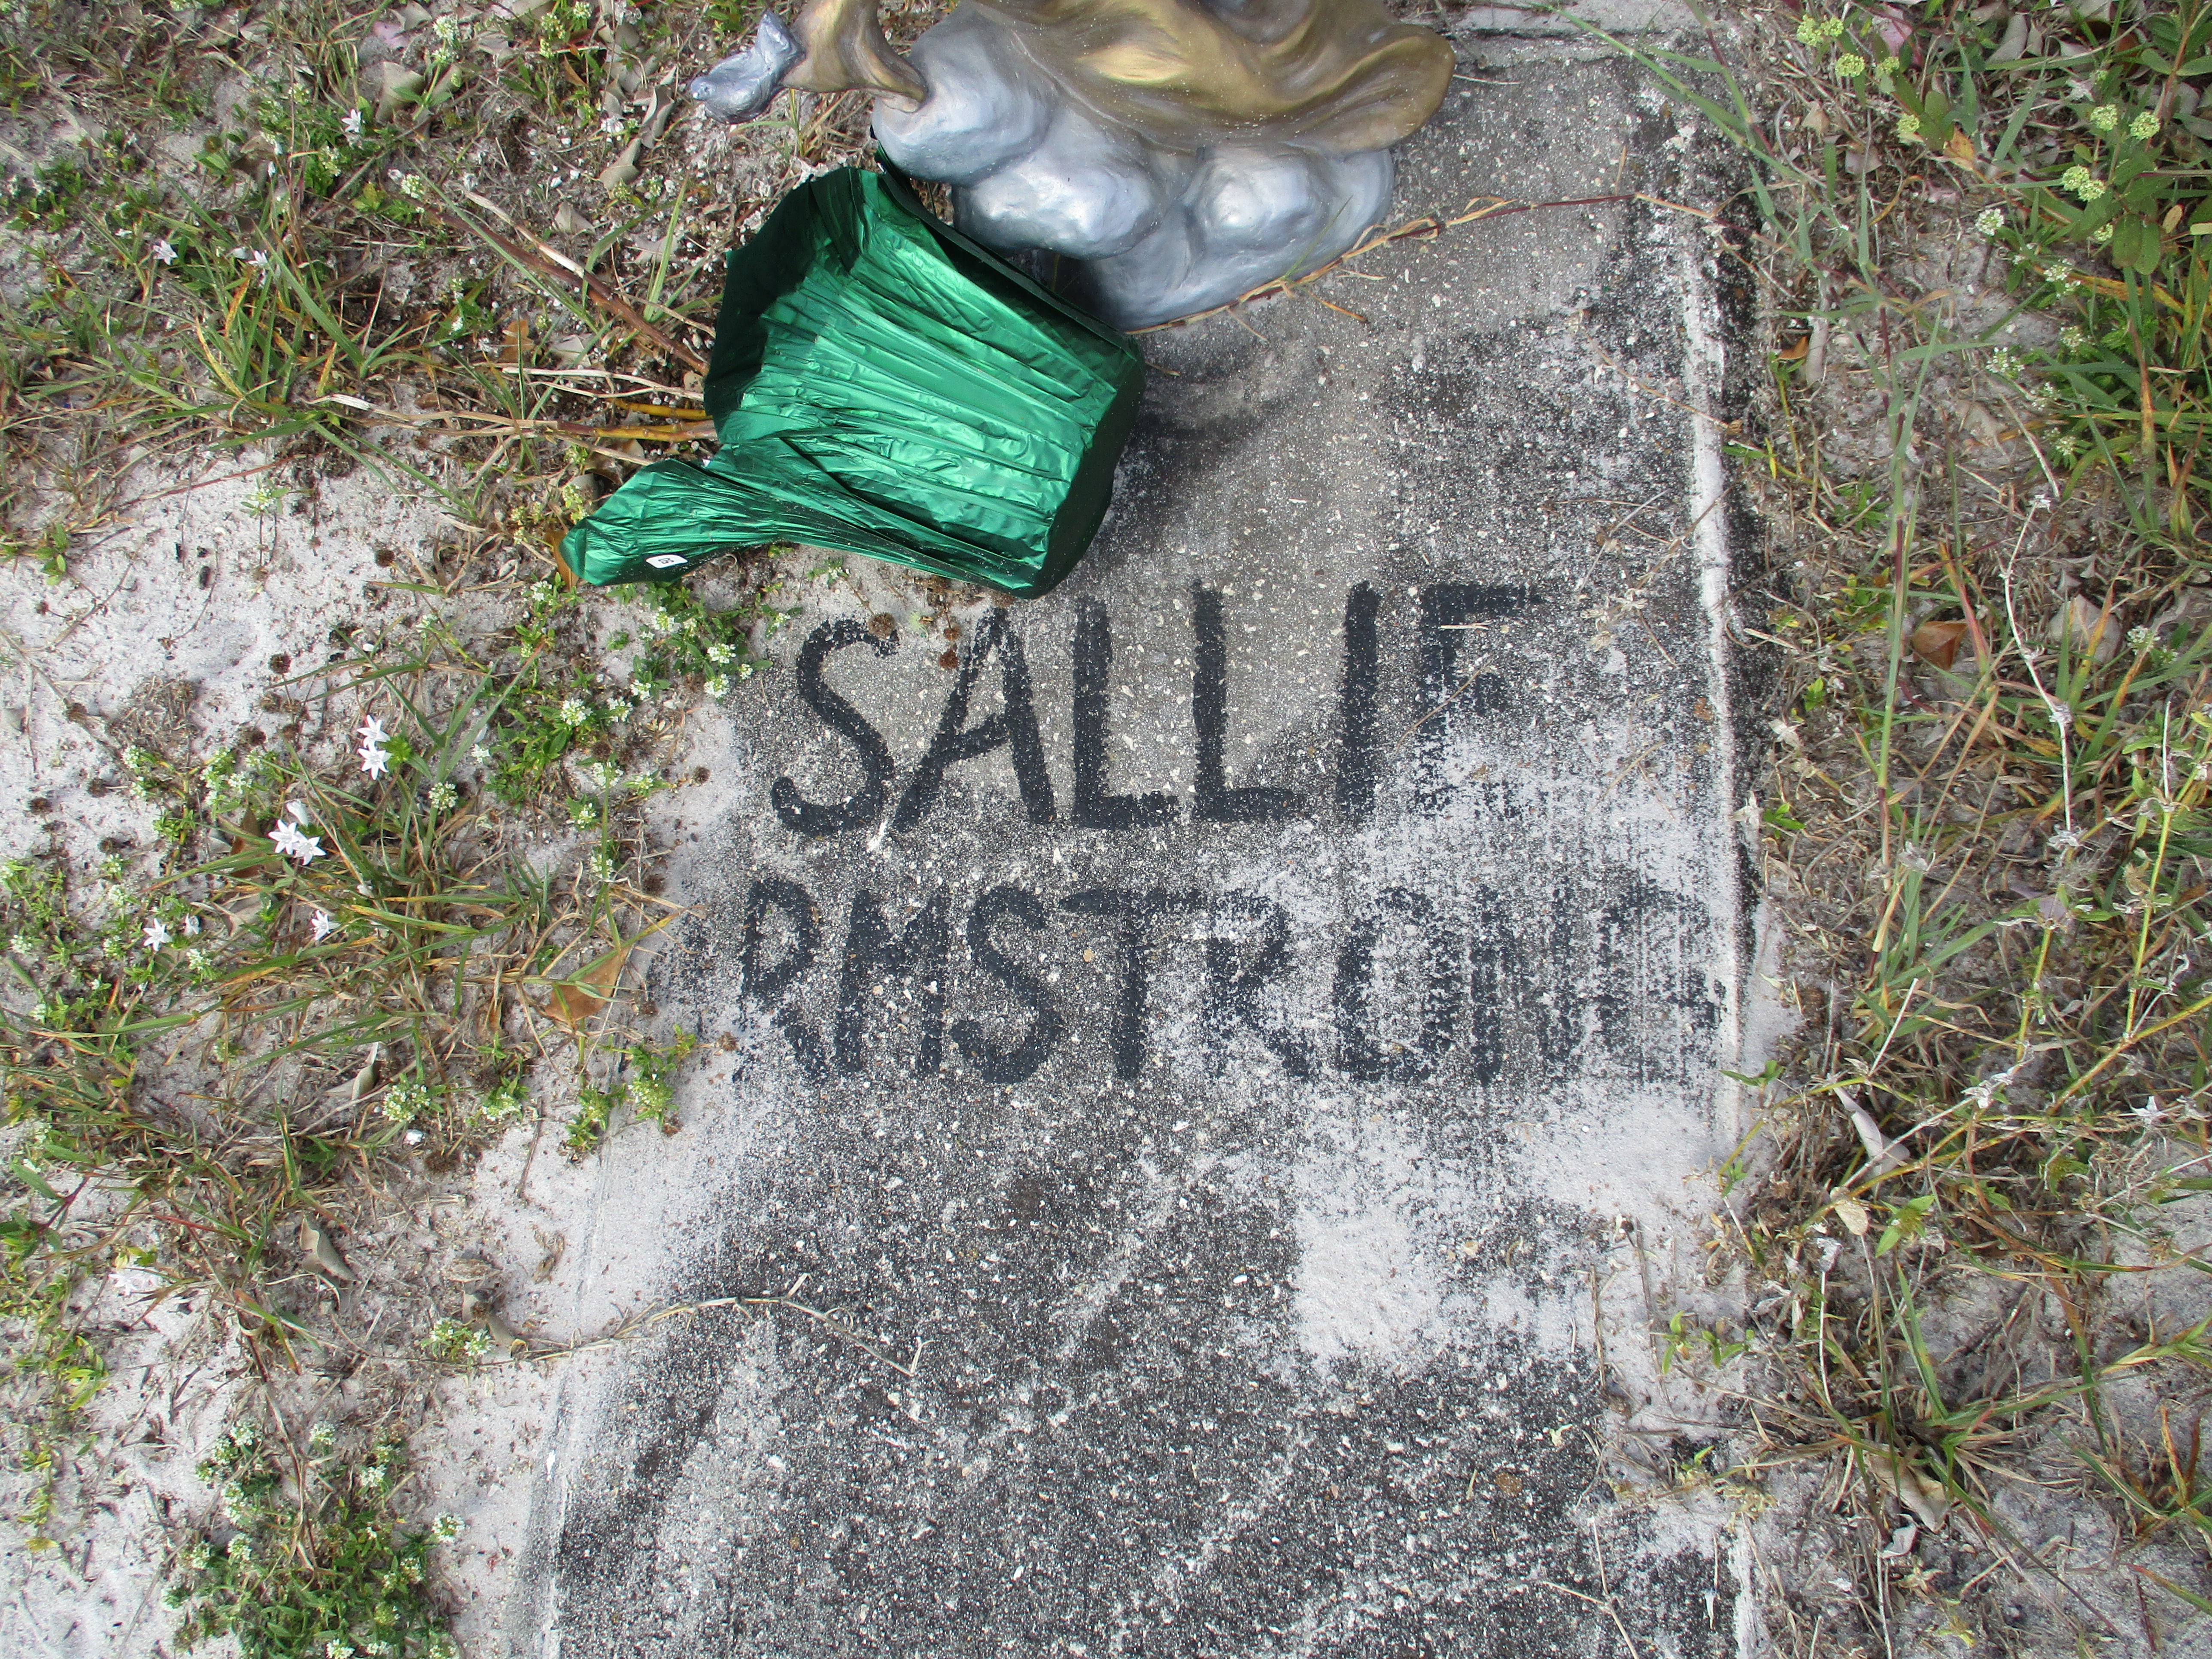 Sallie Armstrong